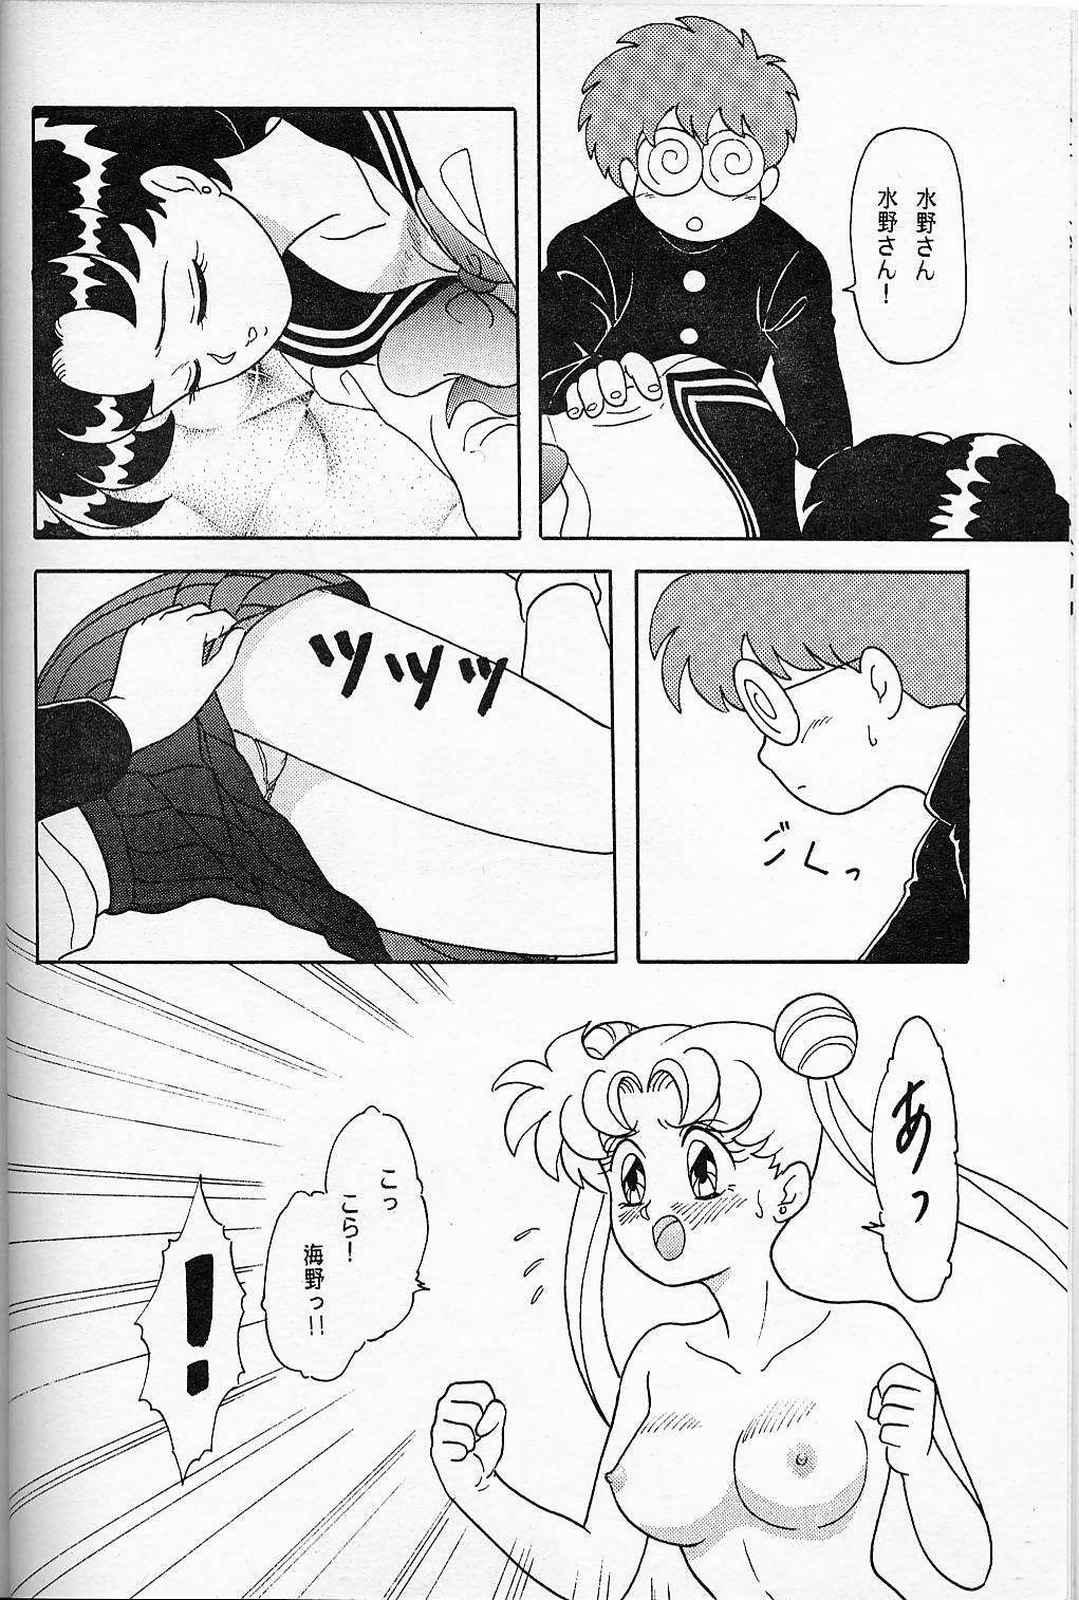 The Lunch Box 6 - Usagi - Sailor moon Naked - Page 9